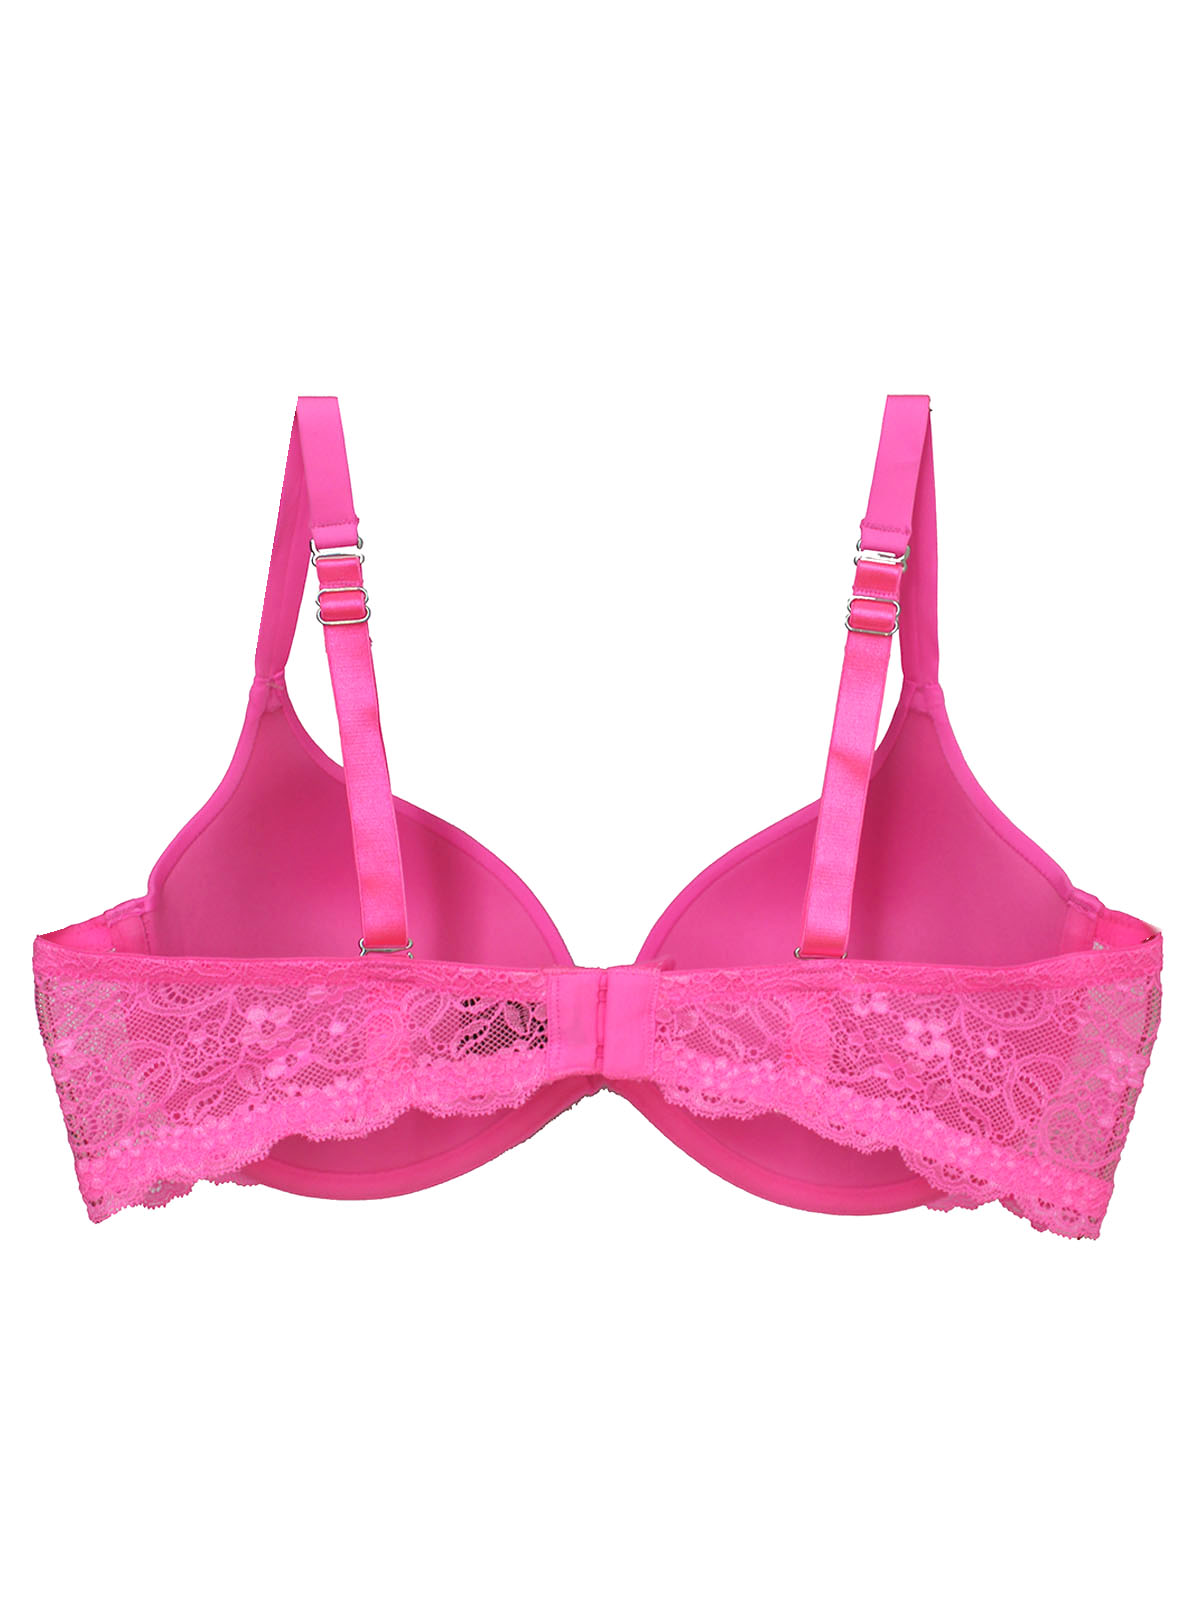 BOUX AVENUE. Dark Pink Underwire Bra. Size 30B £2.80 - PicClick UK